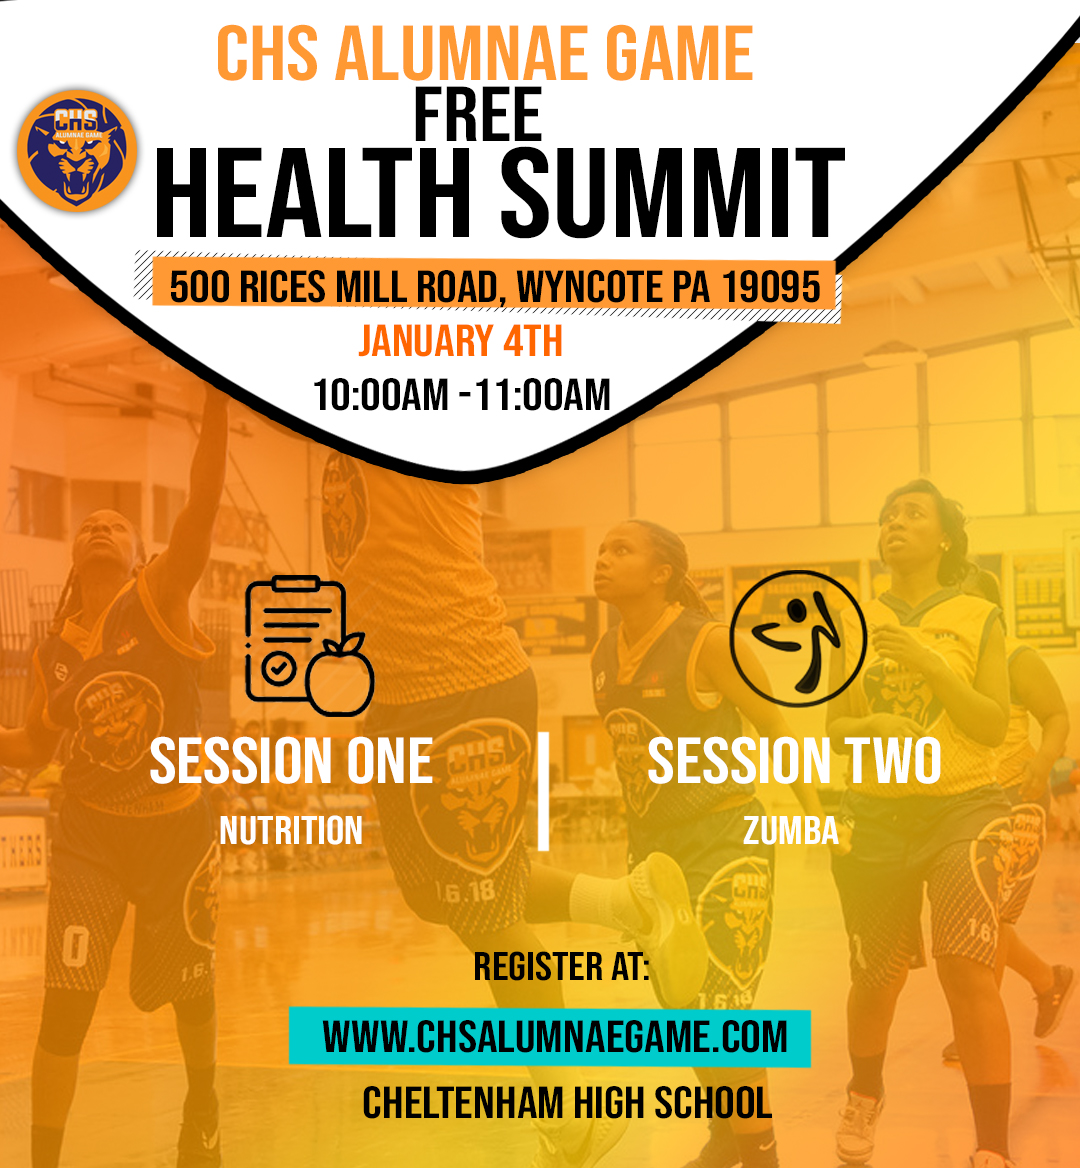 Health Summit CHS Alumnae Game